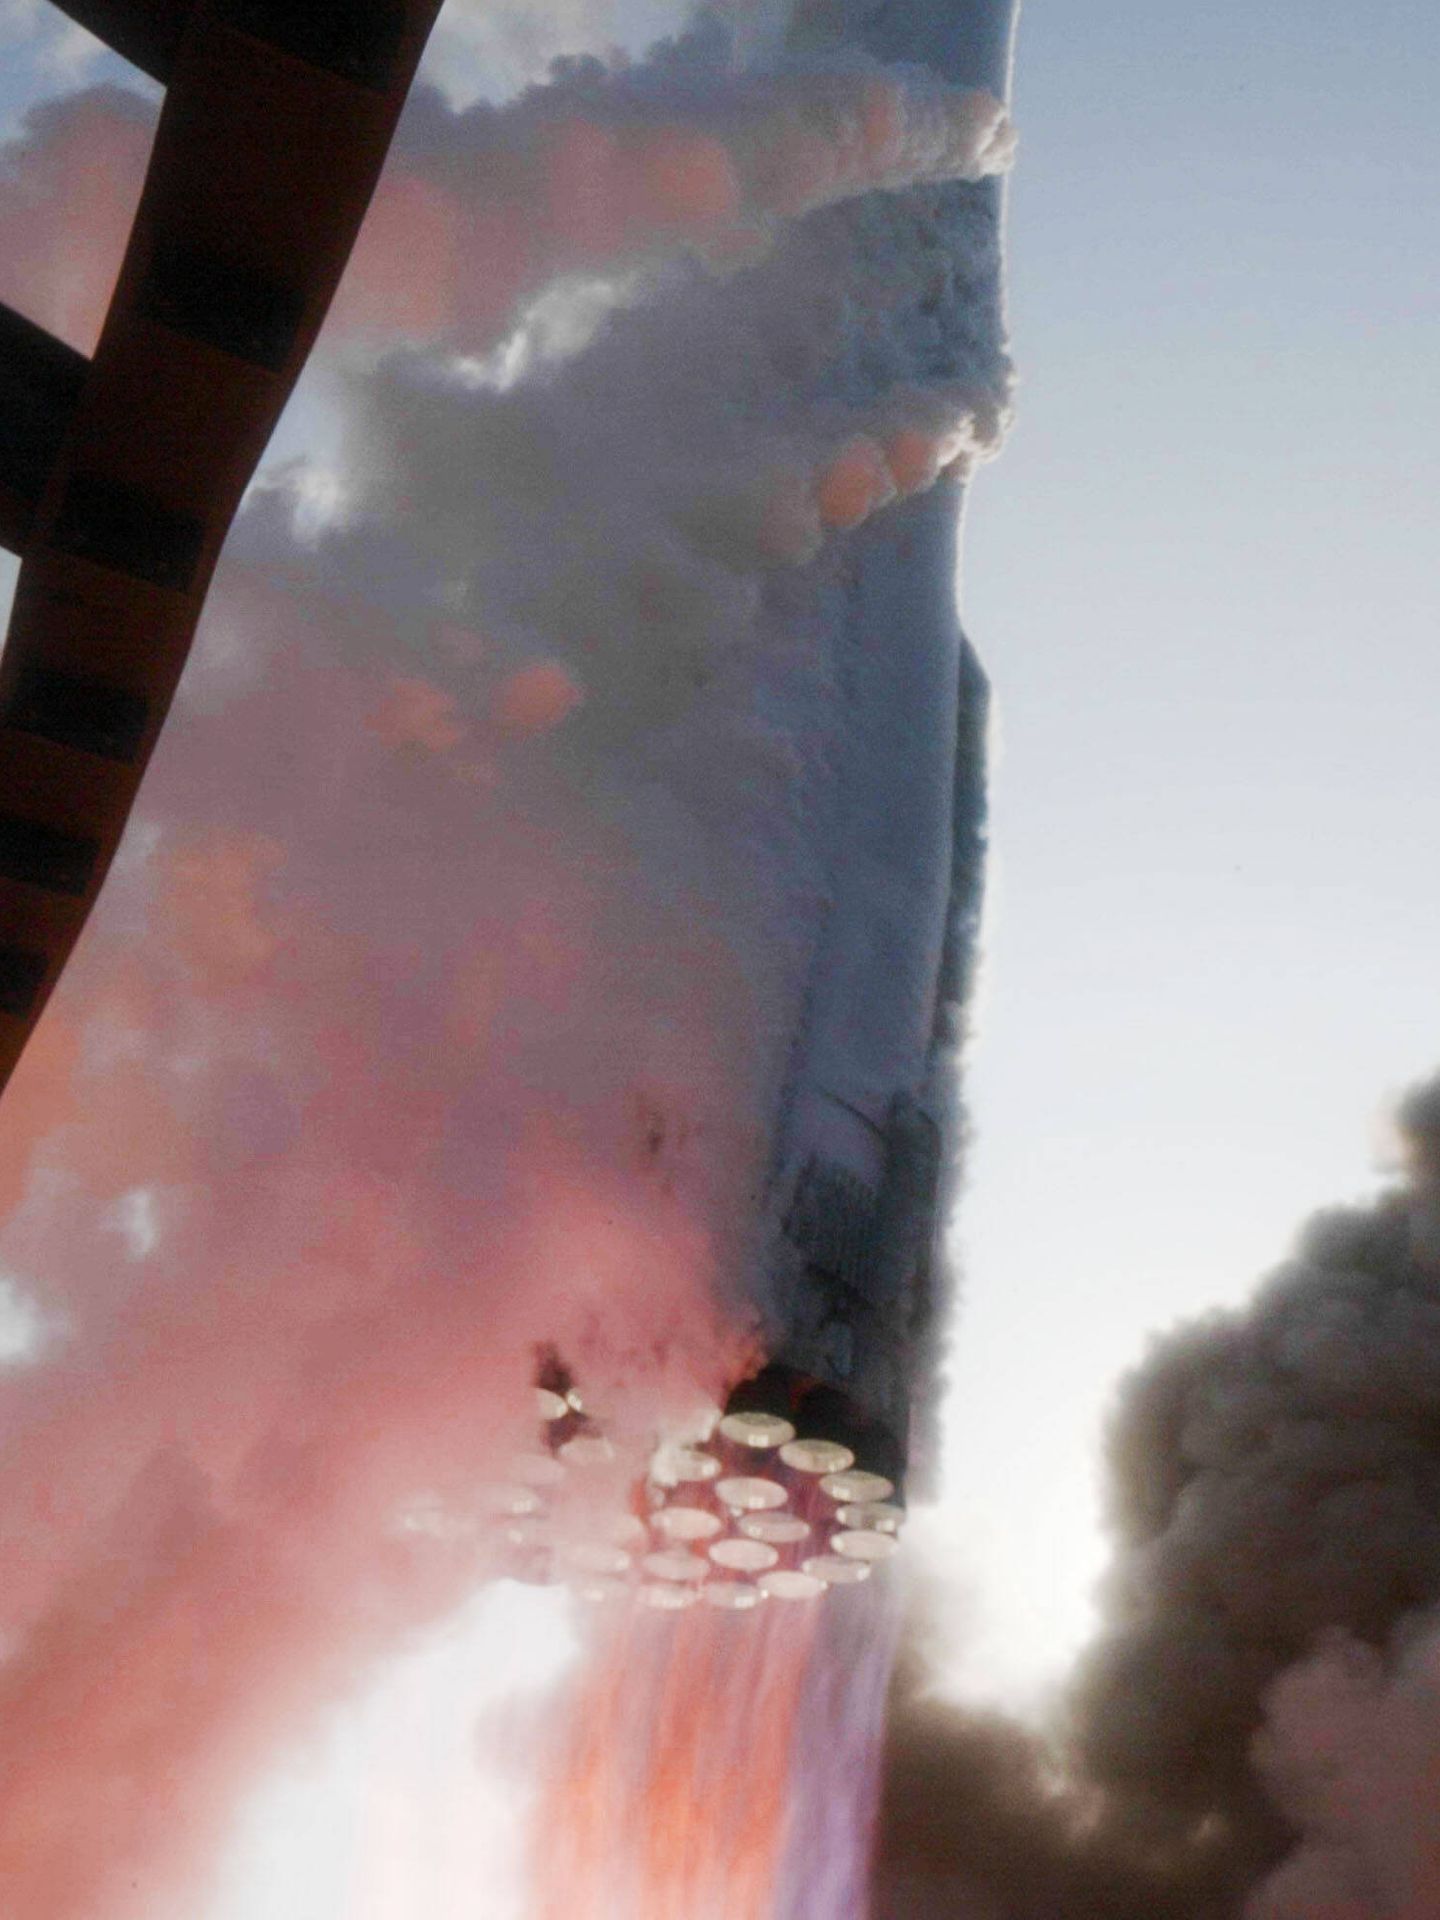 Despegue del Starship. (SpaceX)